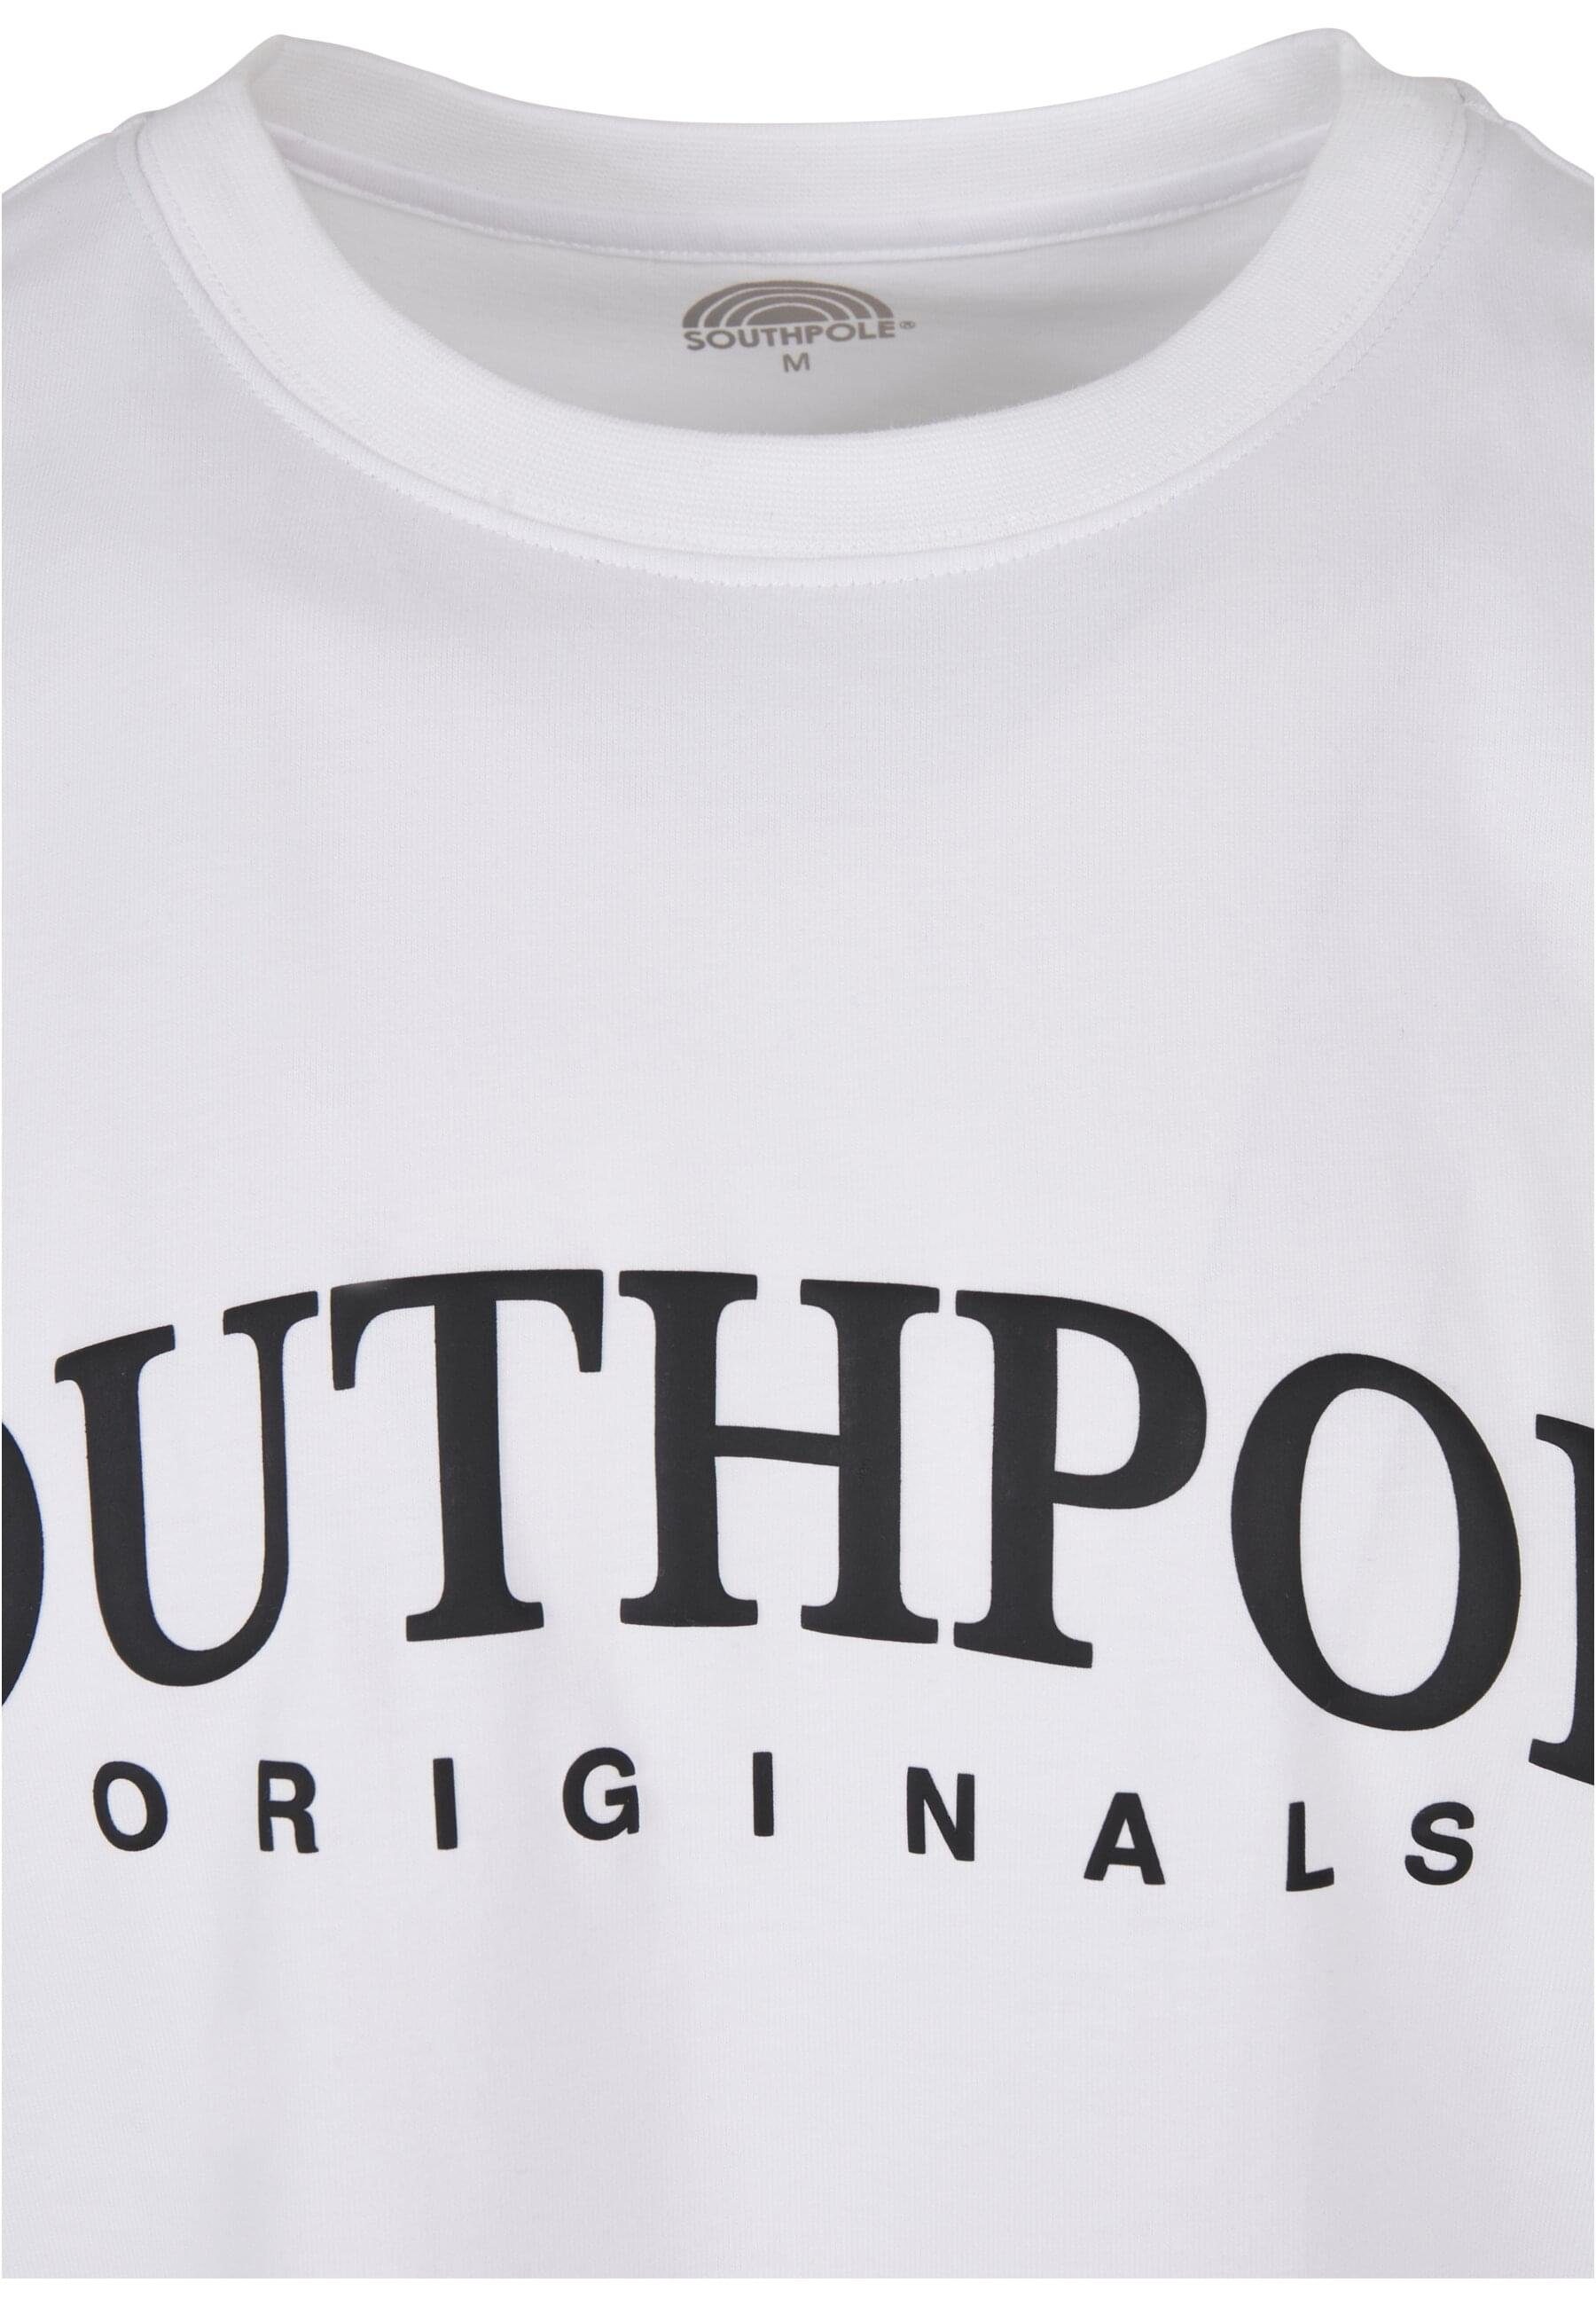 T-Shirt Herren Puffer (1-tlg) Print Southpole Southpole Tee white